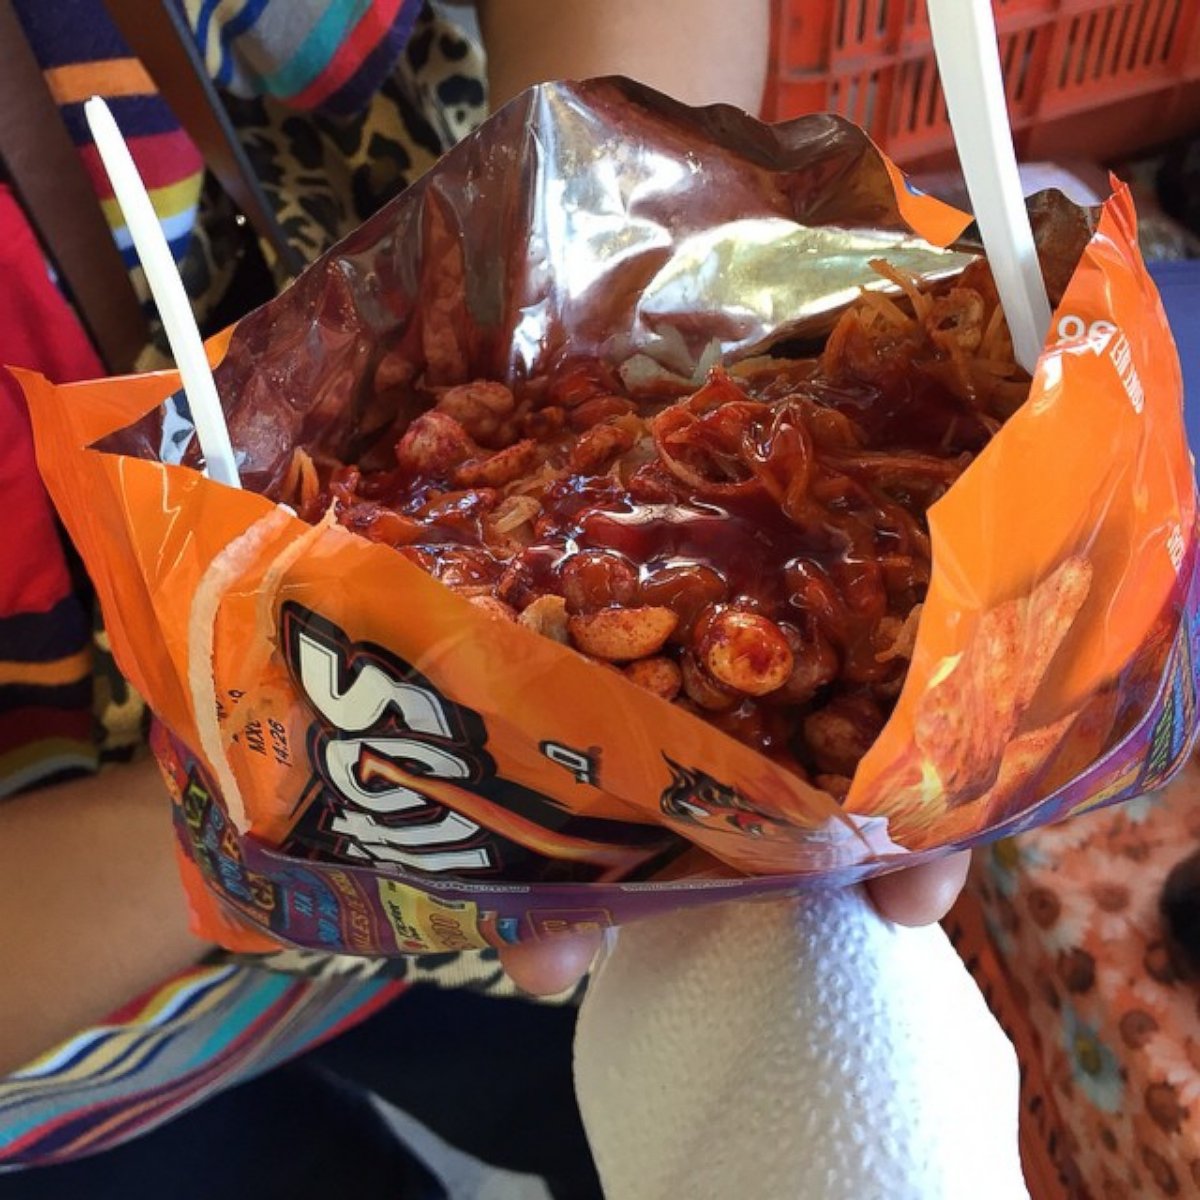 PHOTO: Dorilocos are a new snack involving Doritos.